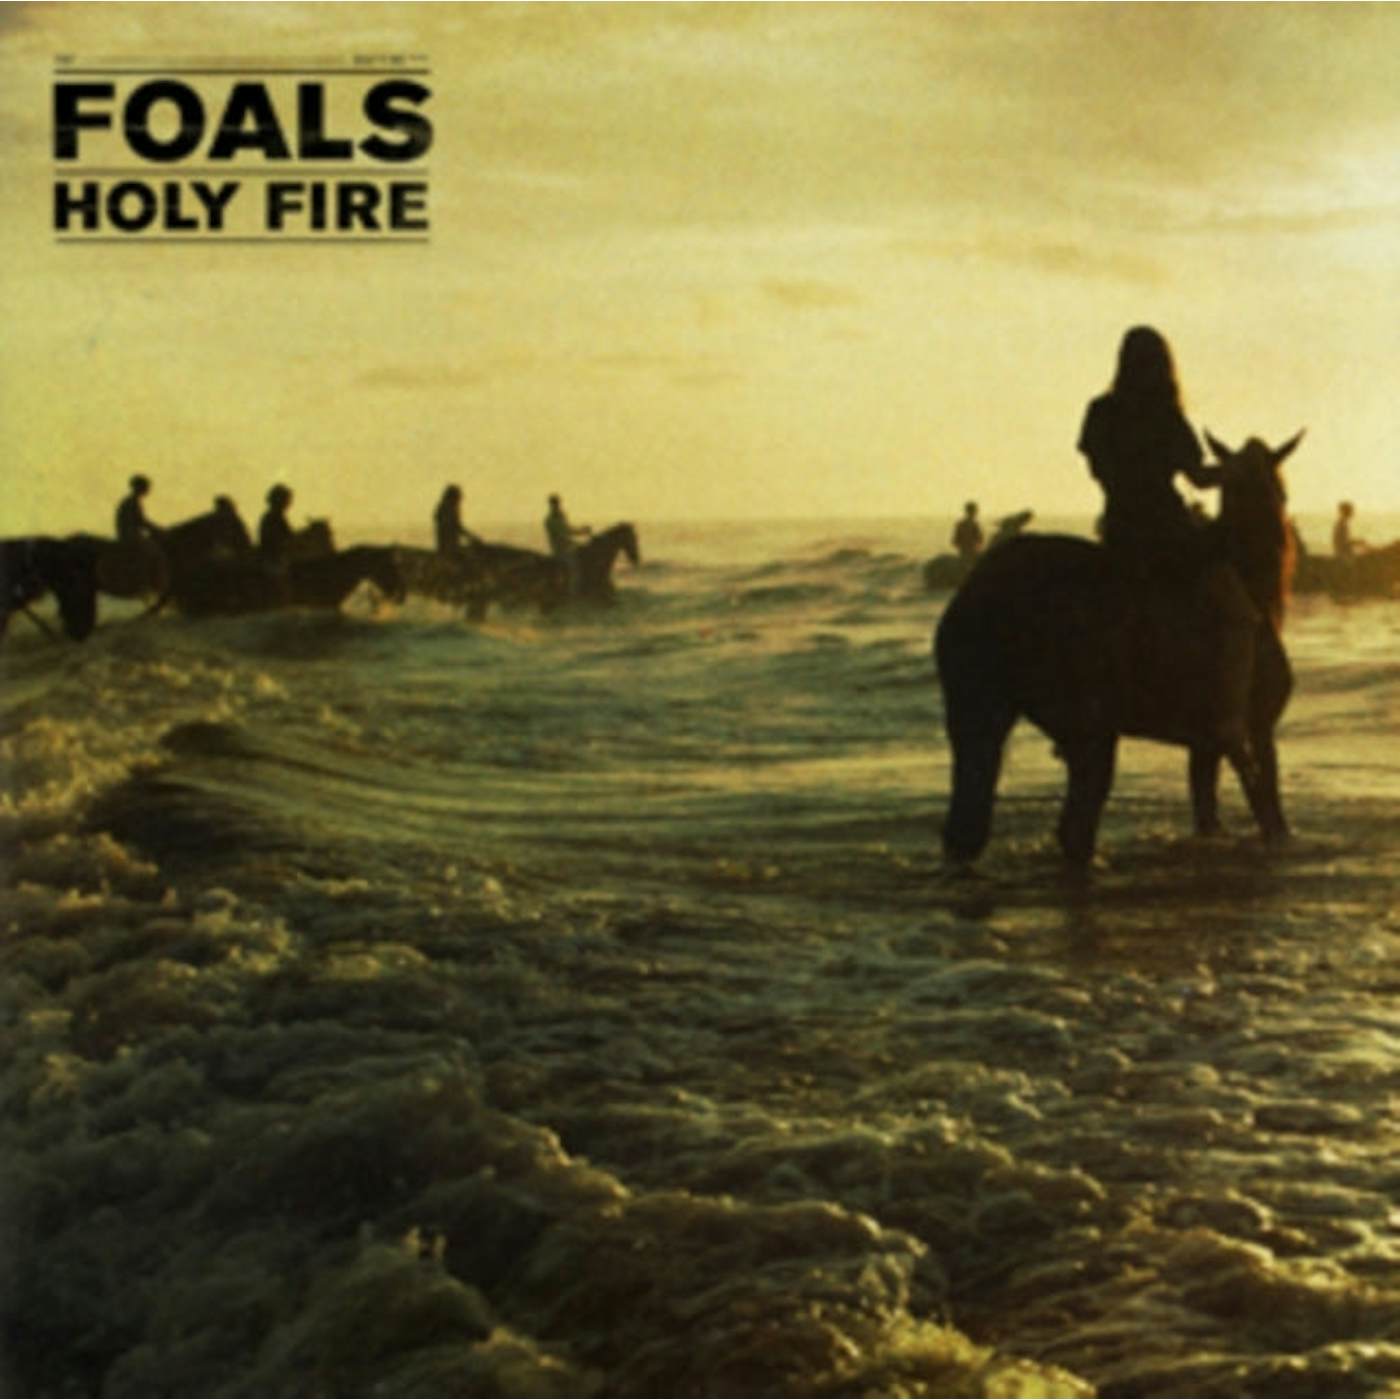 Foals LP Vinyl Record - Holy Fire